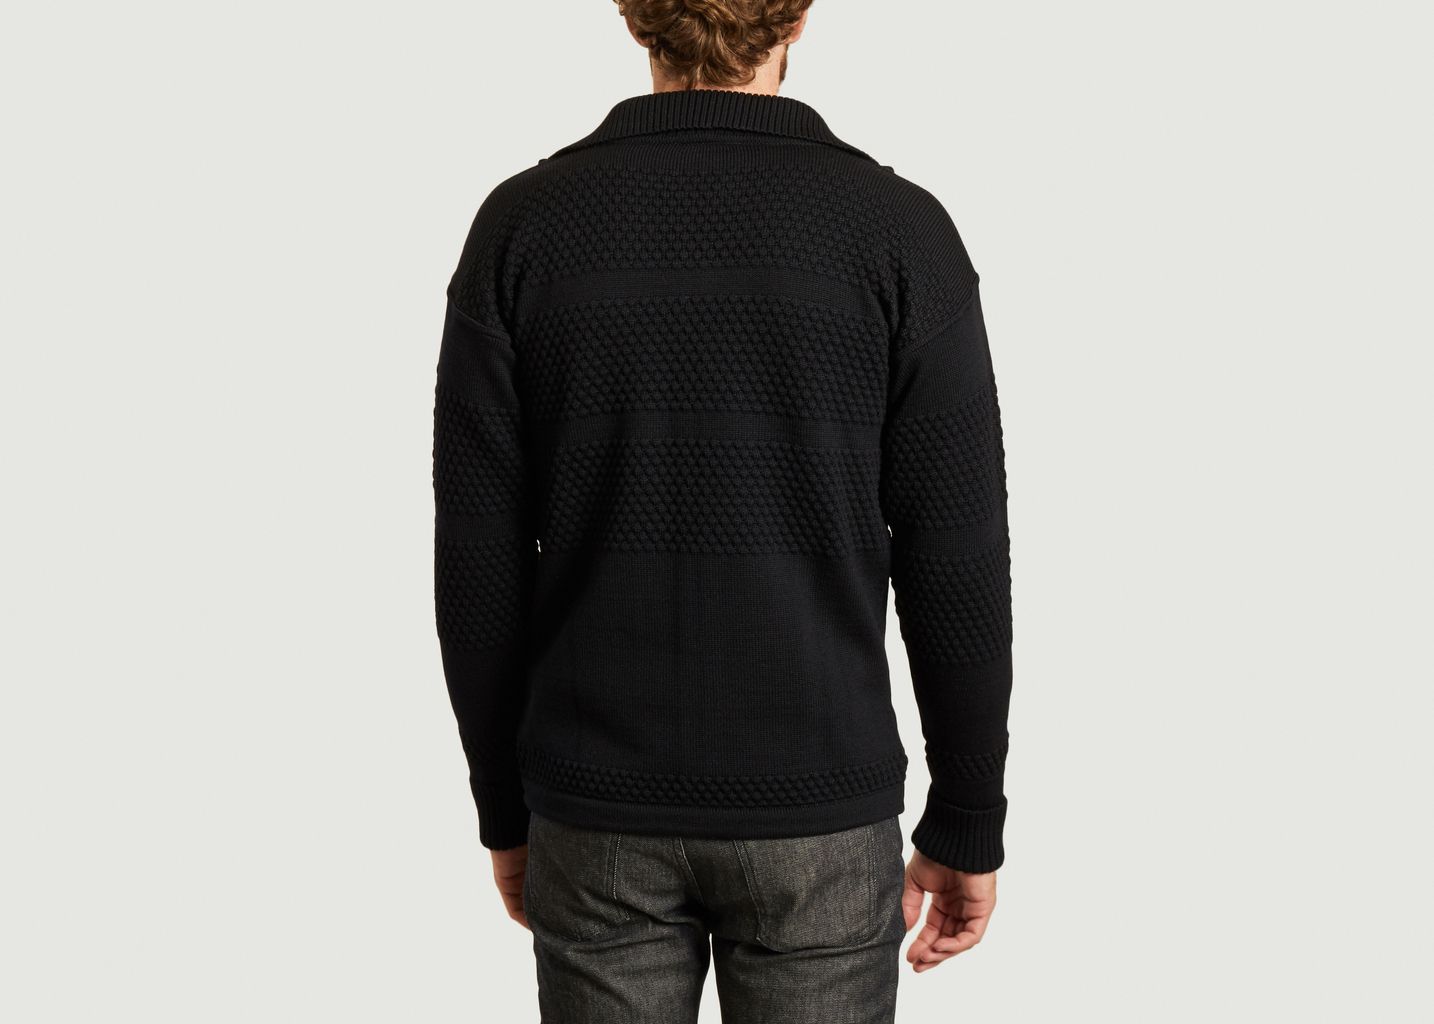 Fisherman zipped sweater - S.N.S. Herning